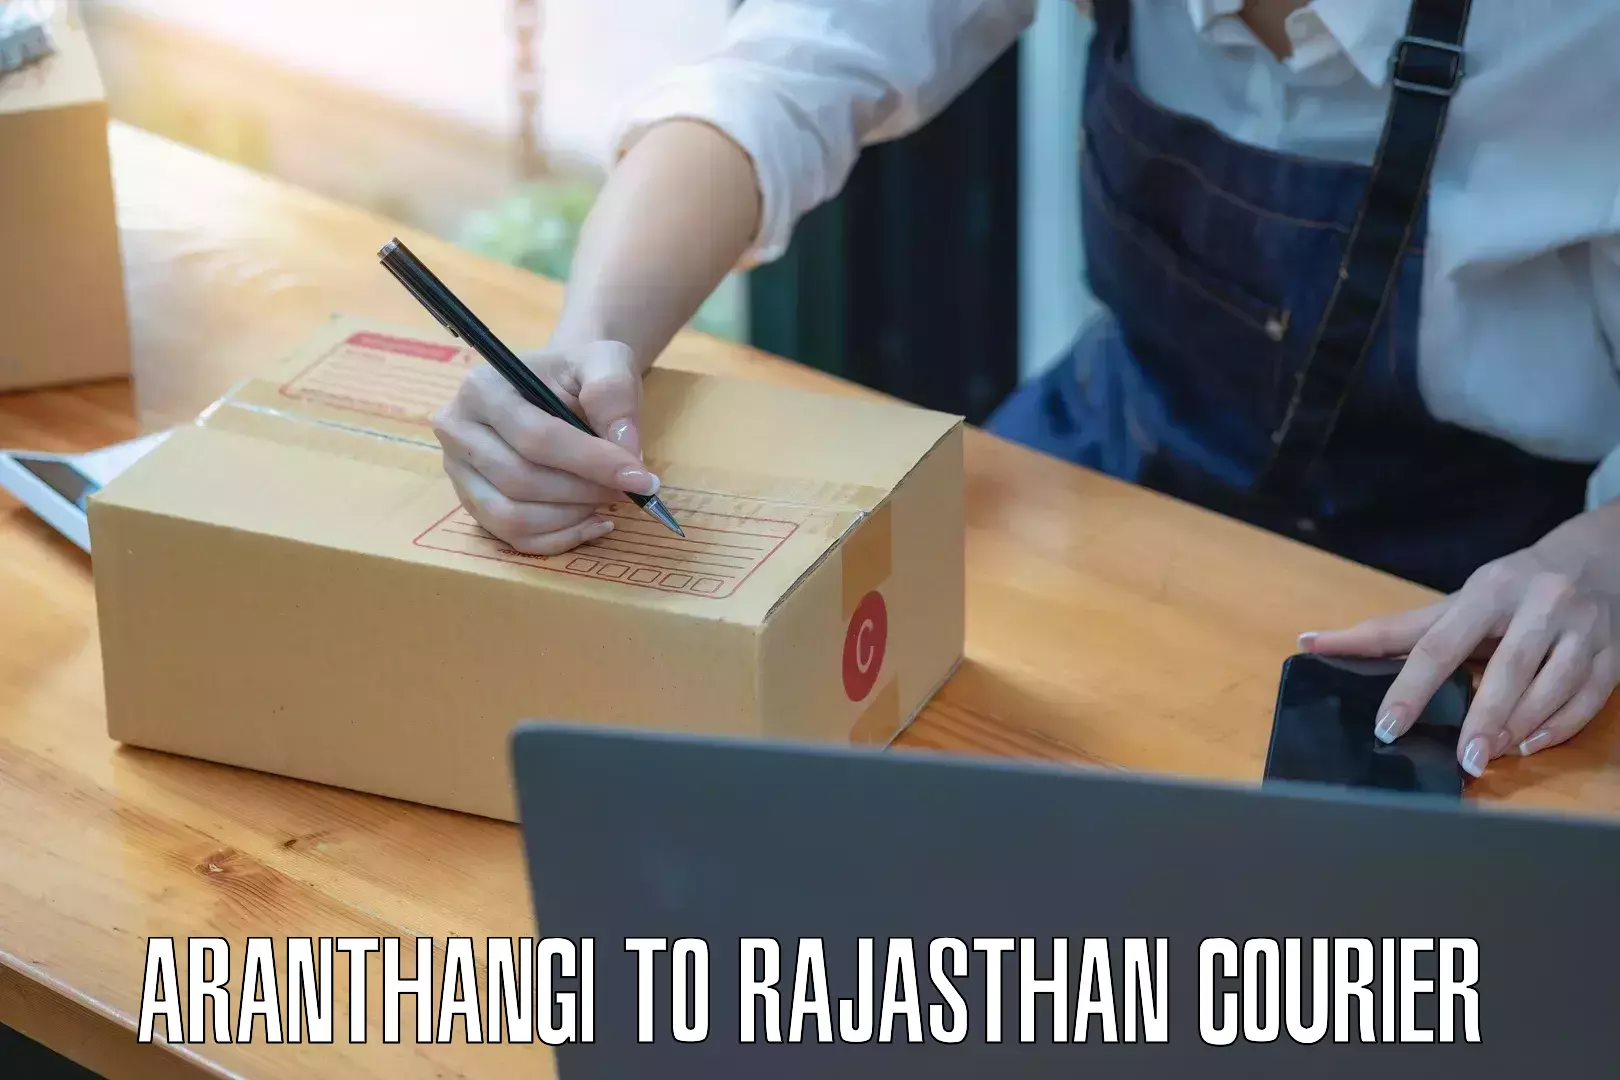 Courier service comparison Aranthangi to Dhorimana